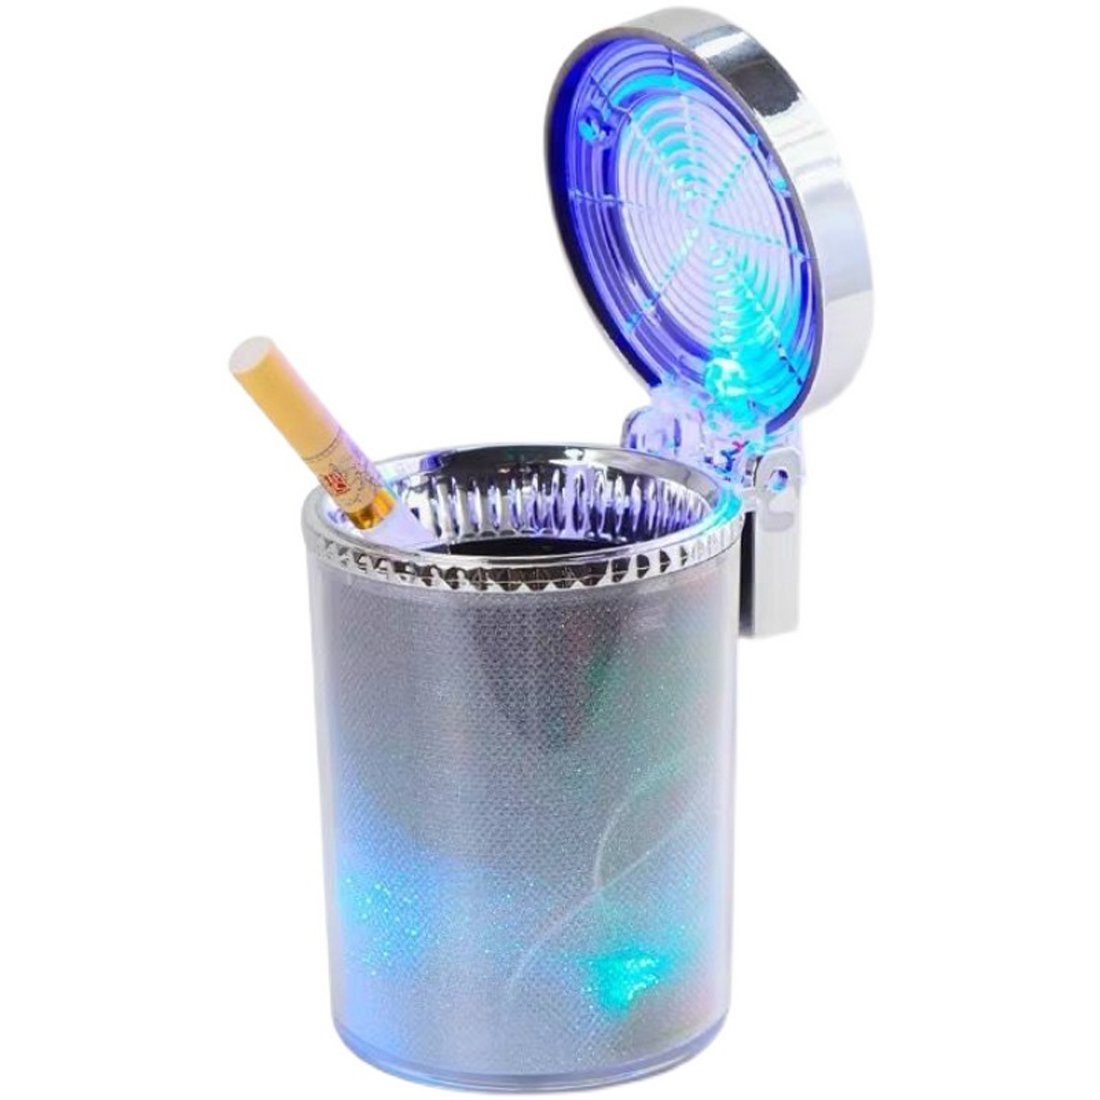 Haiaveng Aschenbecher Auto Cup Aschenbecher mit Deckel und LED-Licht, 70 *  102 mm, 1 Stück